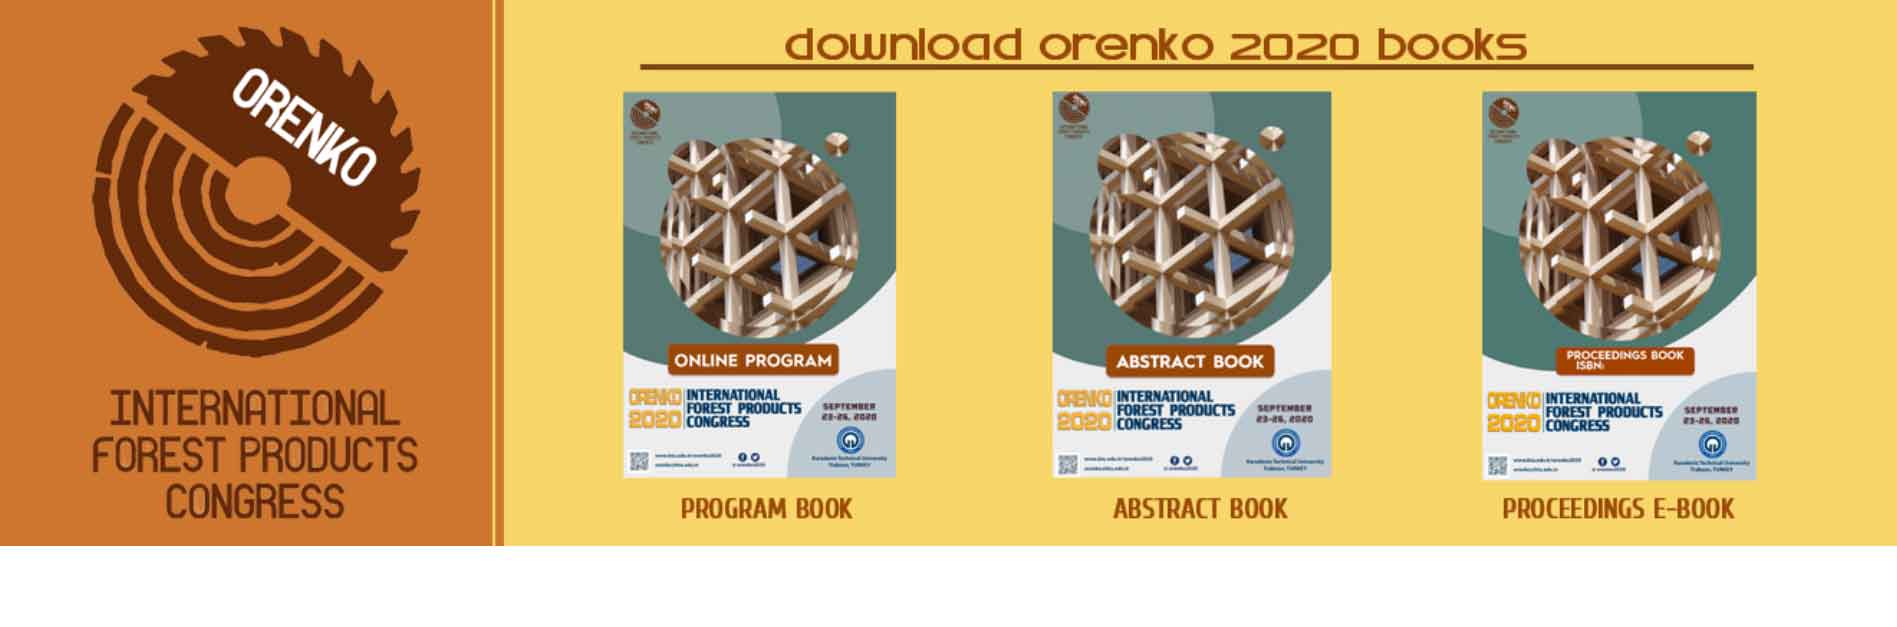 Orenko 2020 Books